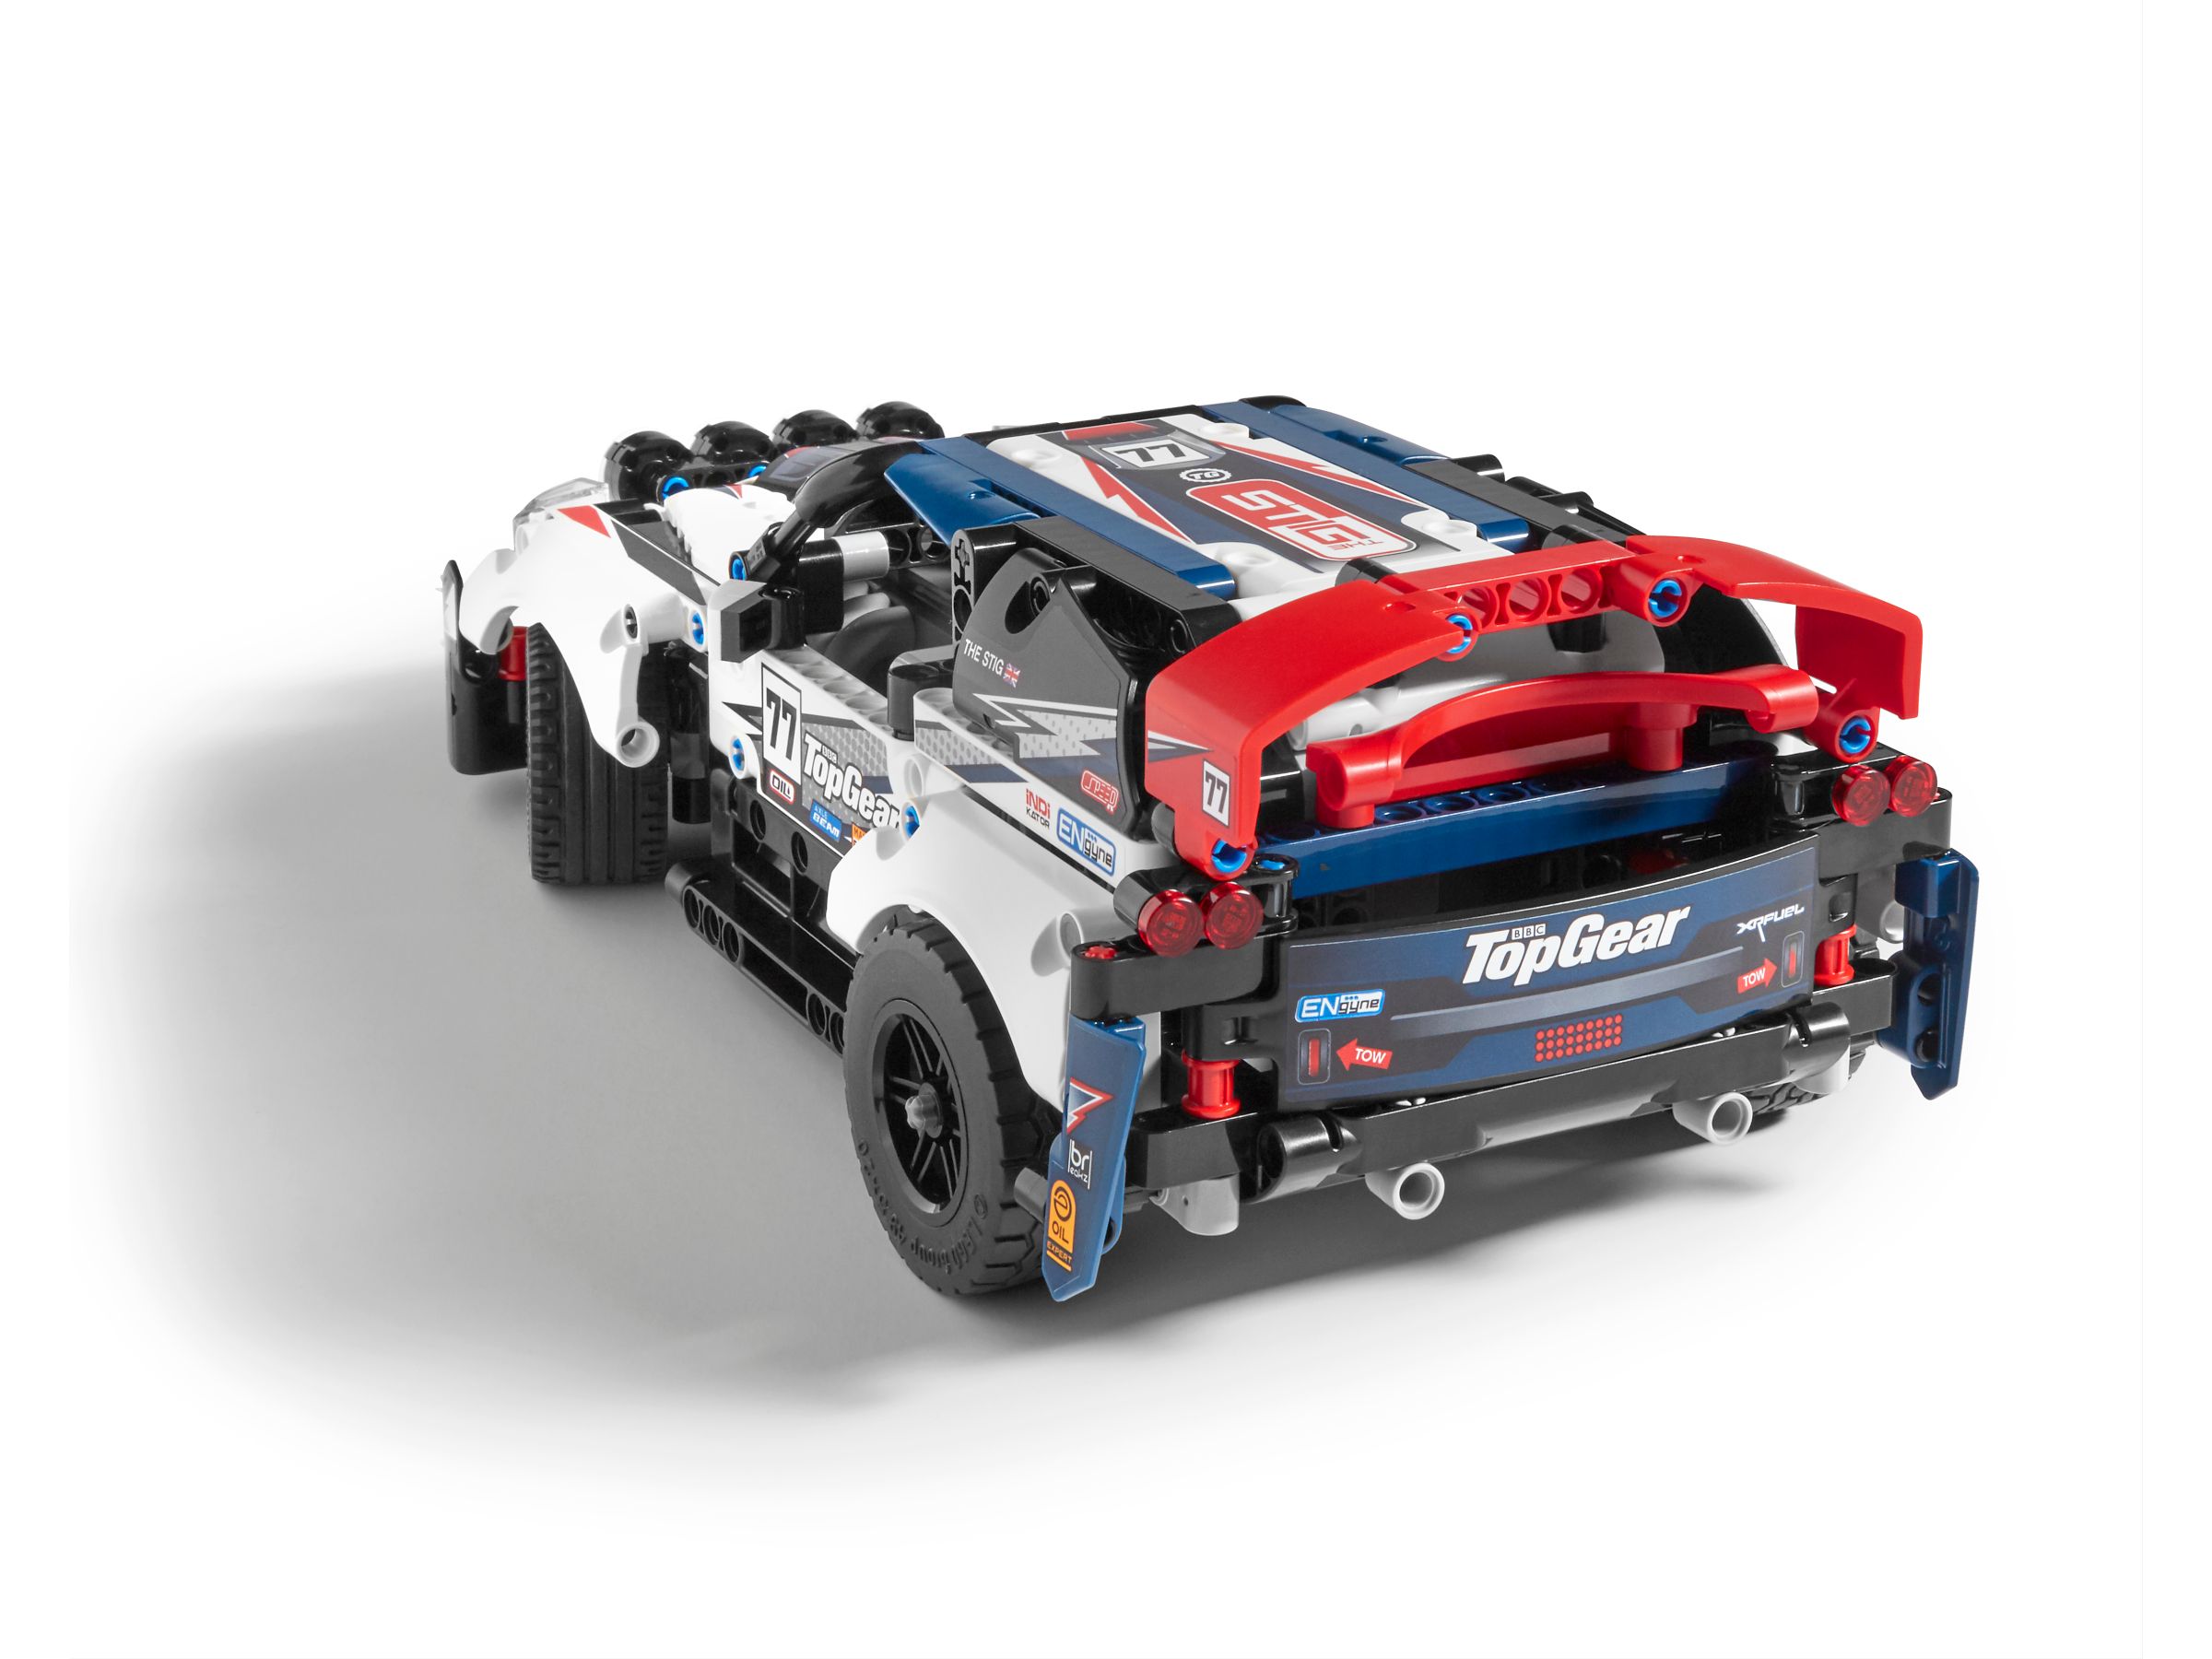 LEGO Technic 42109 Top-Gear Ralleyauto mit App-Steuerung LEGO_42109_alt8.jpg